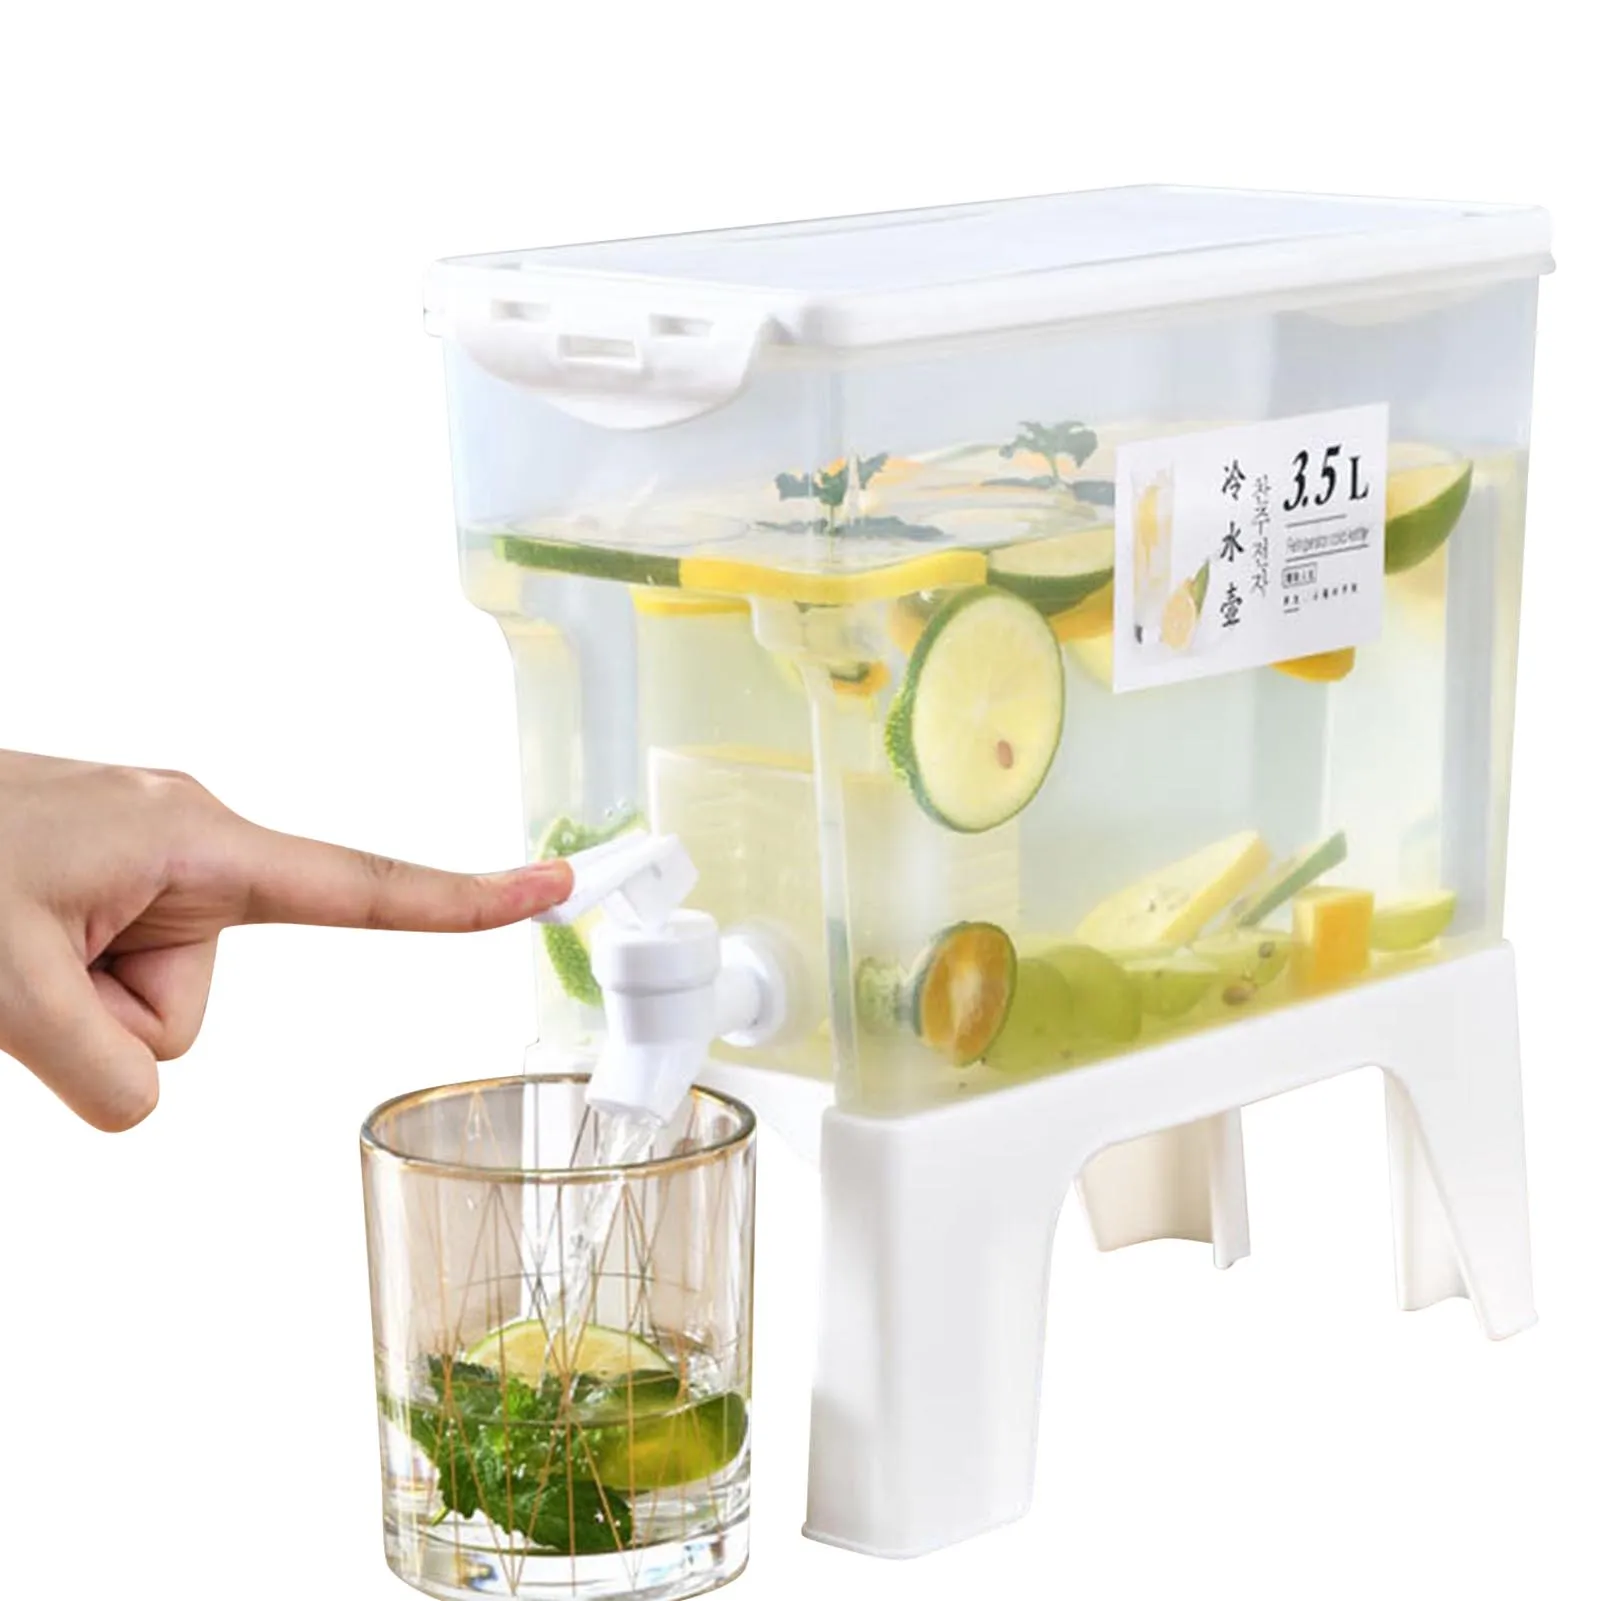 Drink Dispenser With Removable Base 3.5L Refrigerator Water Jug Cold Kettle Water Jug Milk Lemonade Juice Container Drink Pot